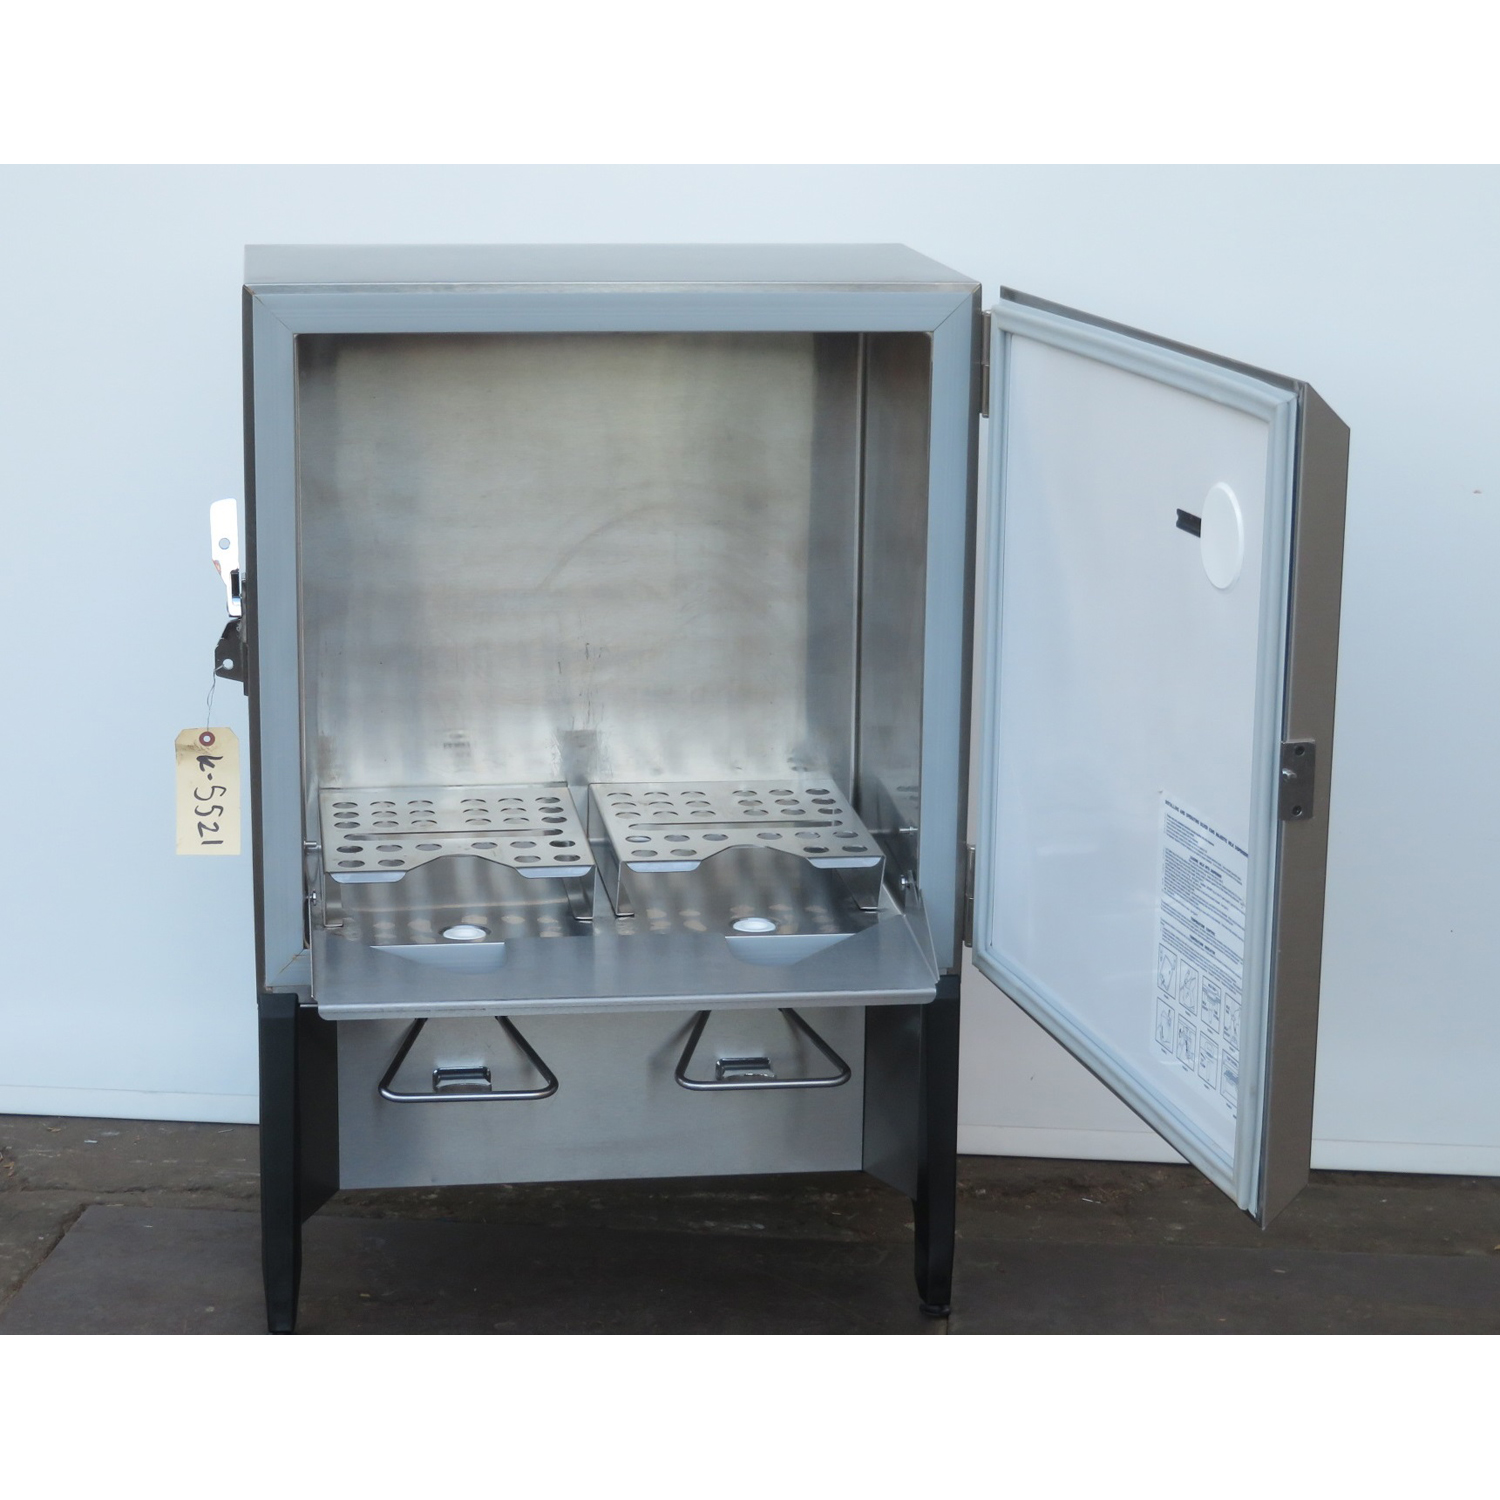 Silver King SKMAJ2 Milk Dispenser 2 Comp, Used Great Condition image 1